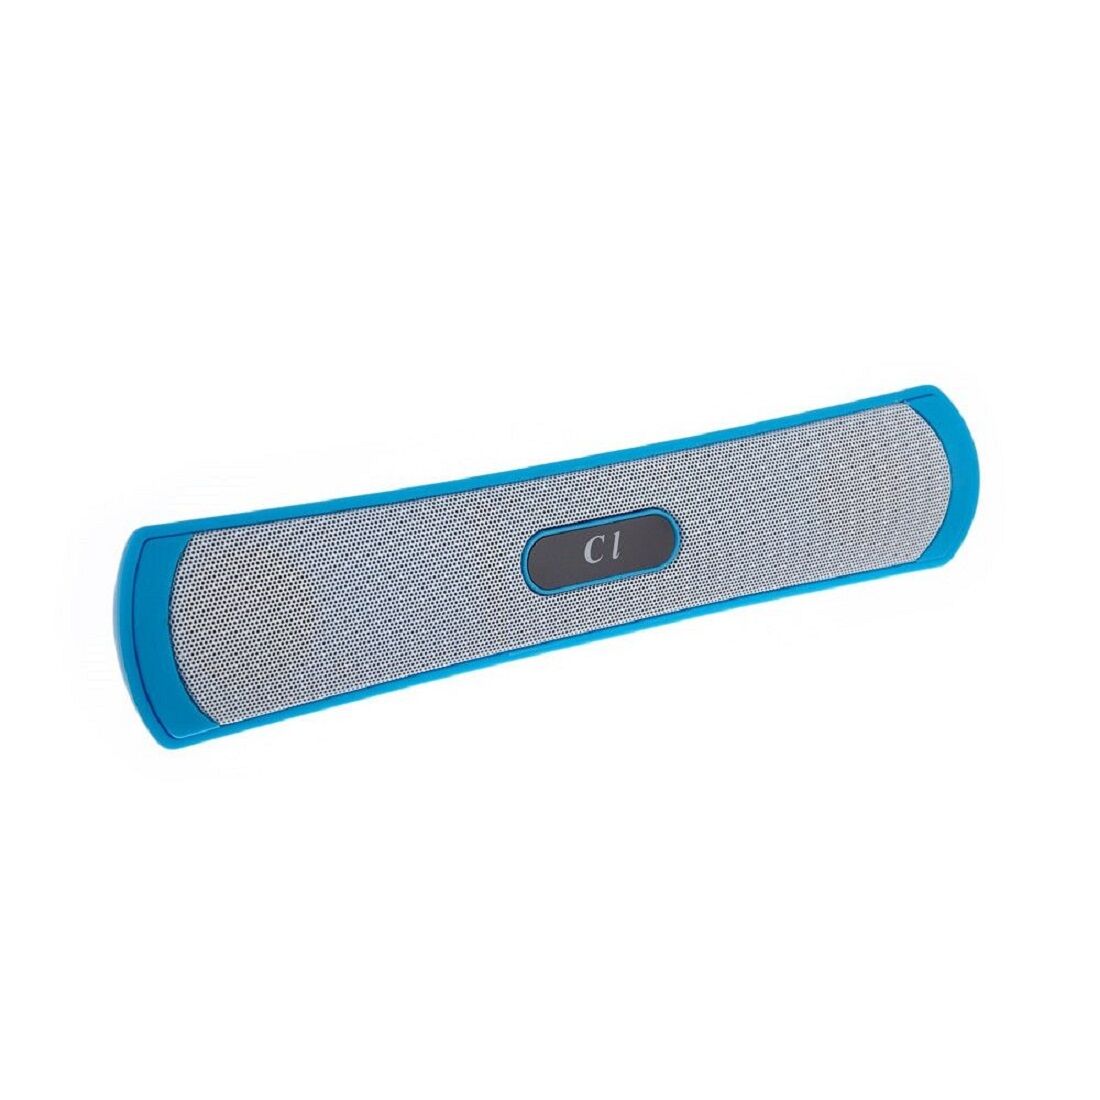 Boxa Portabila Stereo cu Interfata Wireless Bluetooth, MP3, Model B13, Albastra